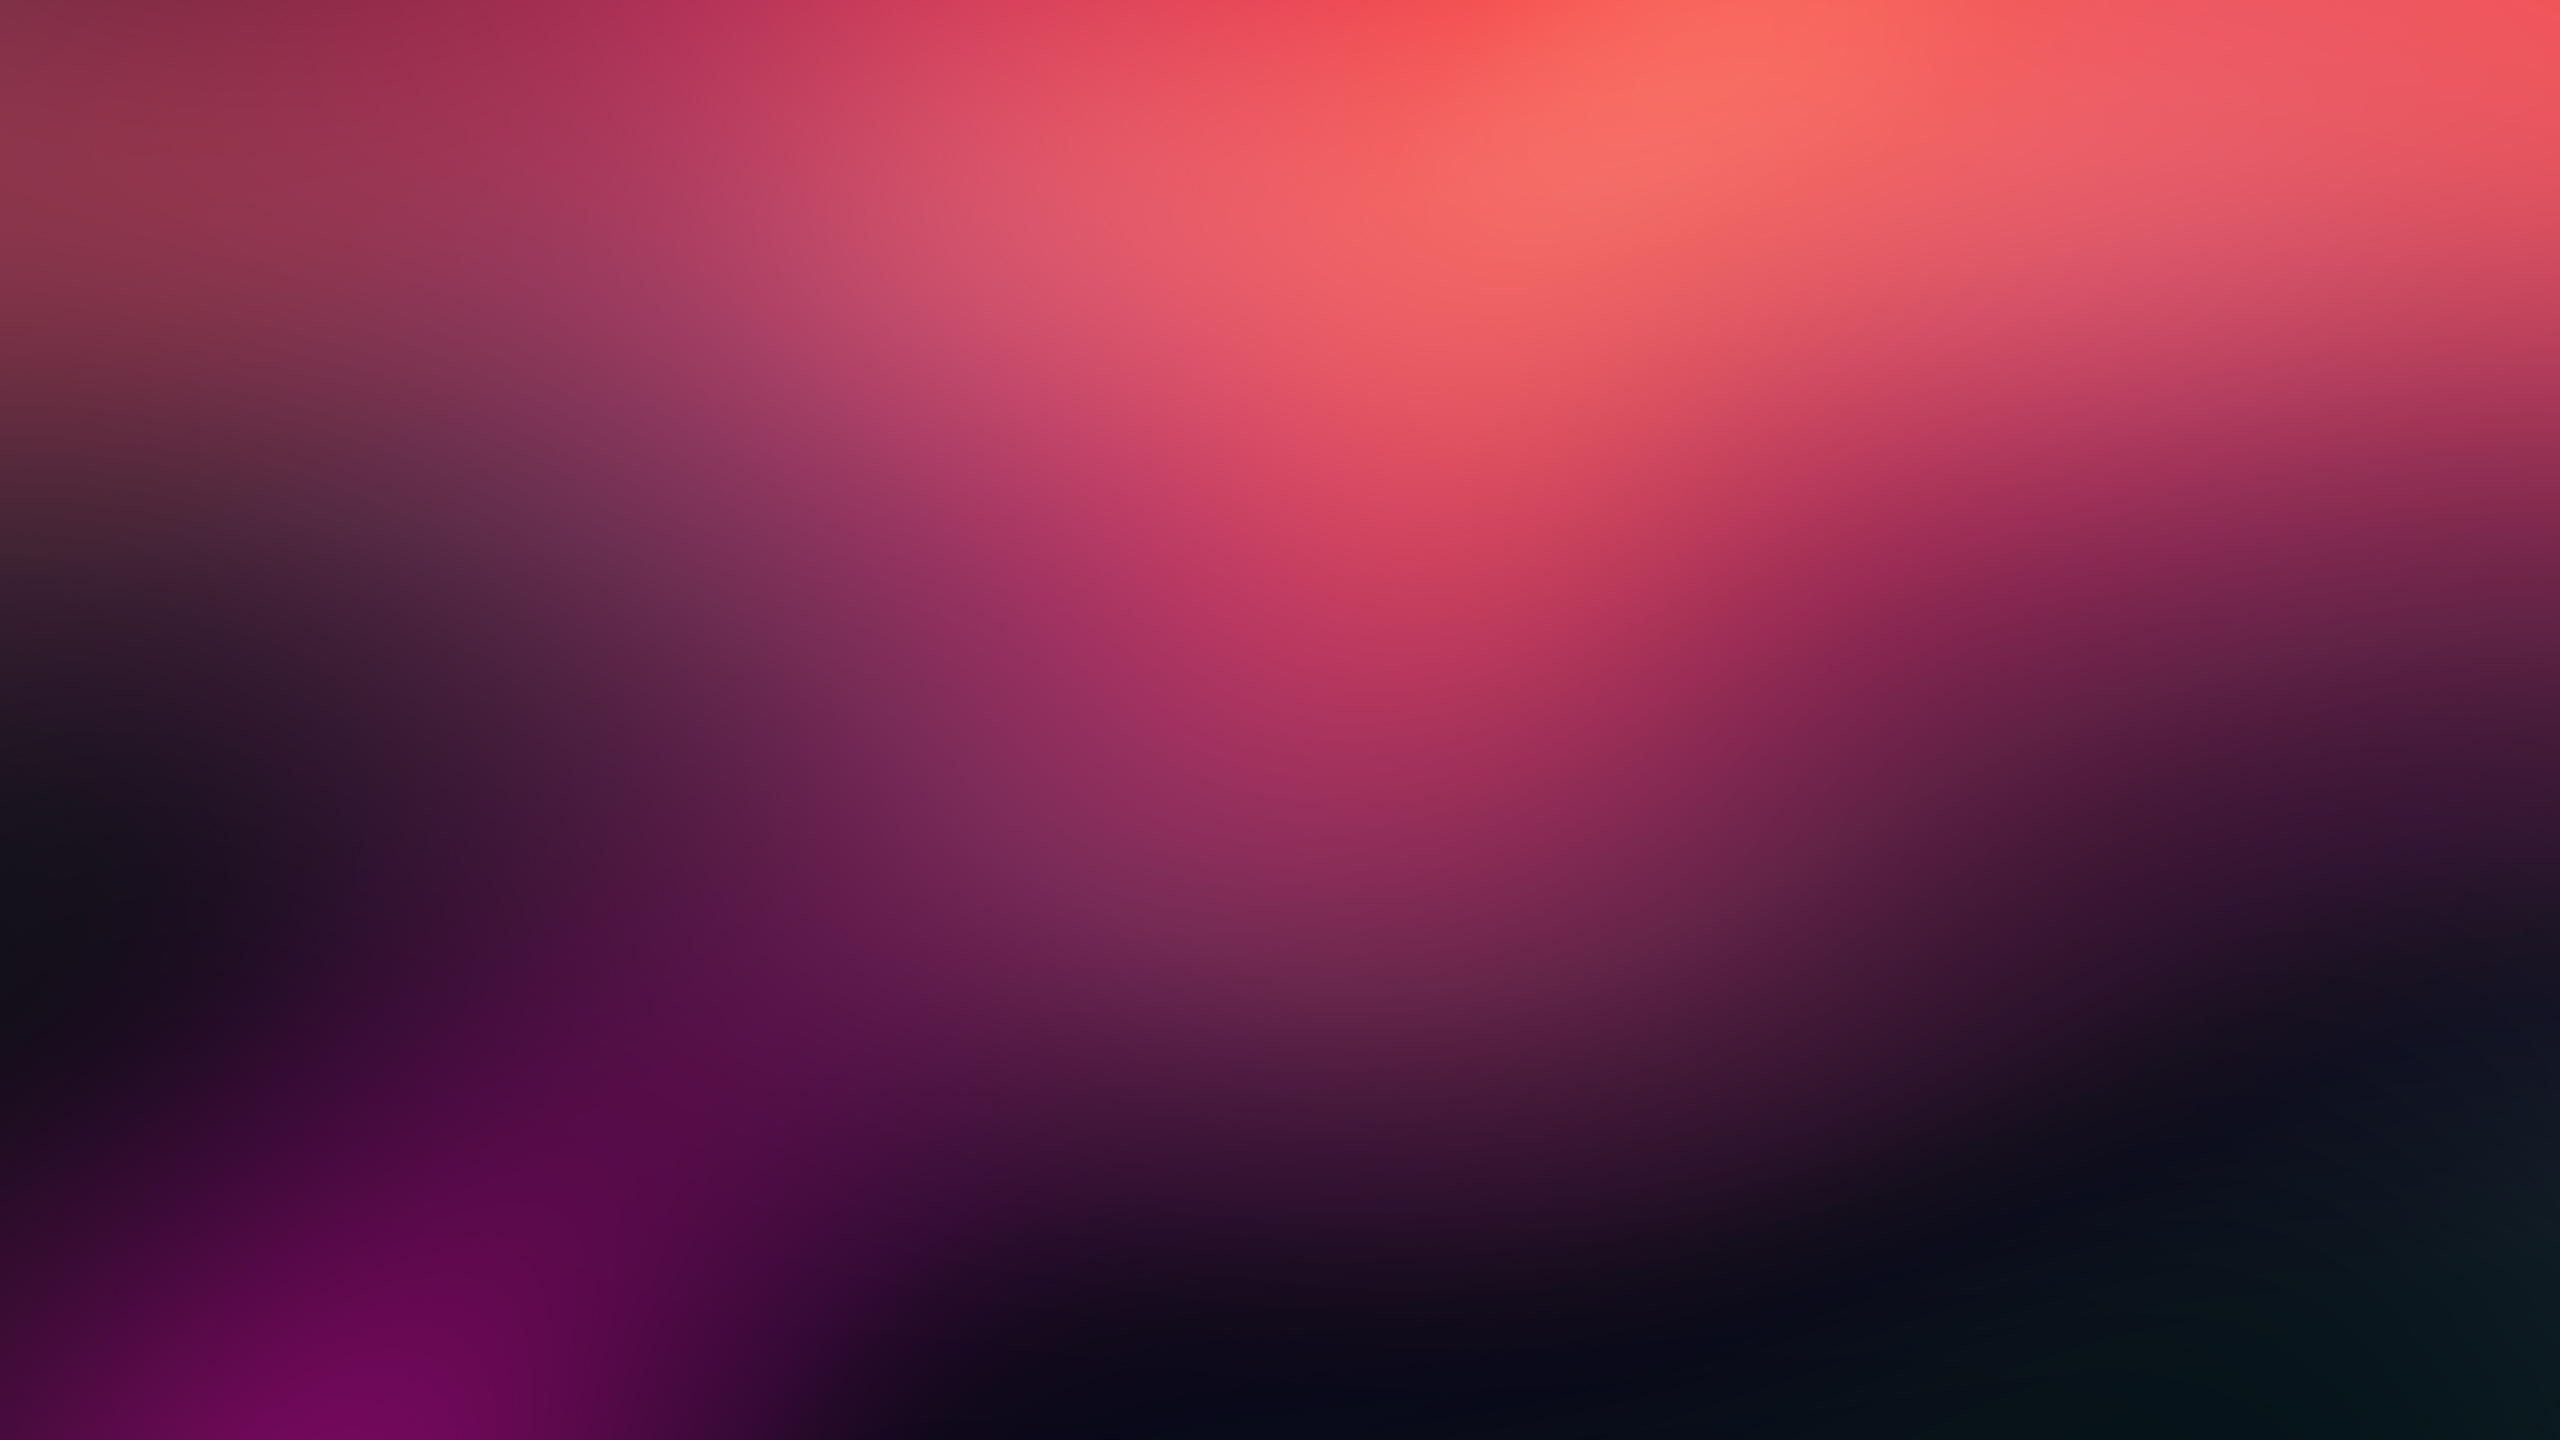 2048x1152 fond d'écran,violet,violet,rose,rouge,bleu